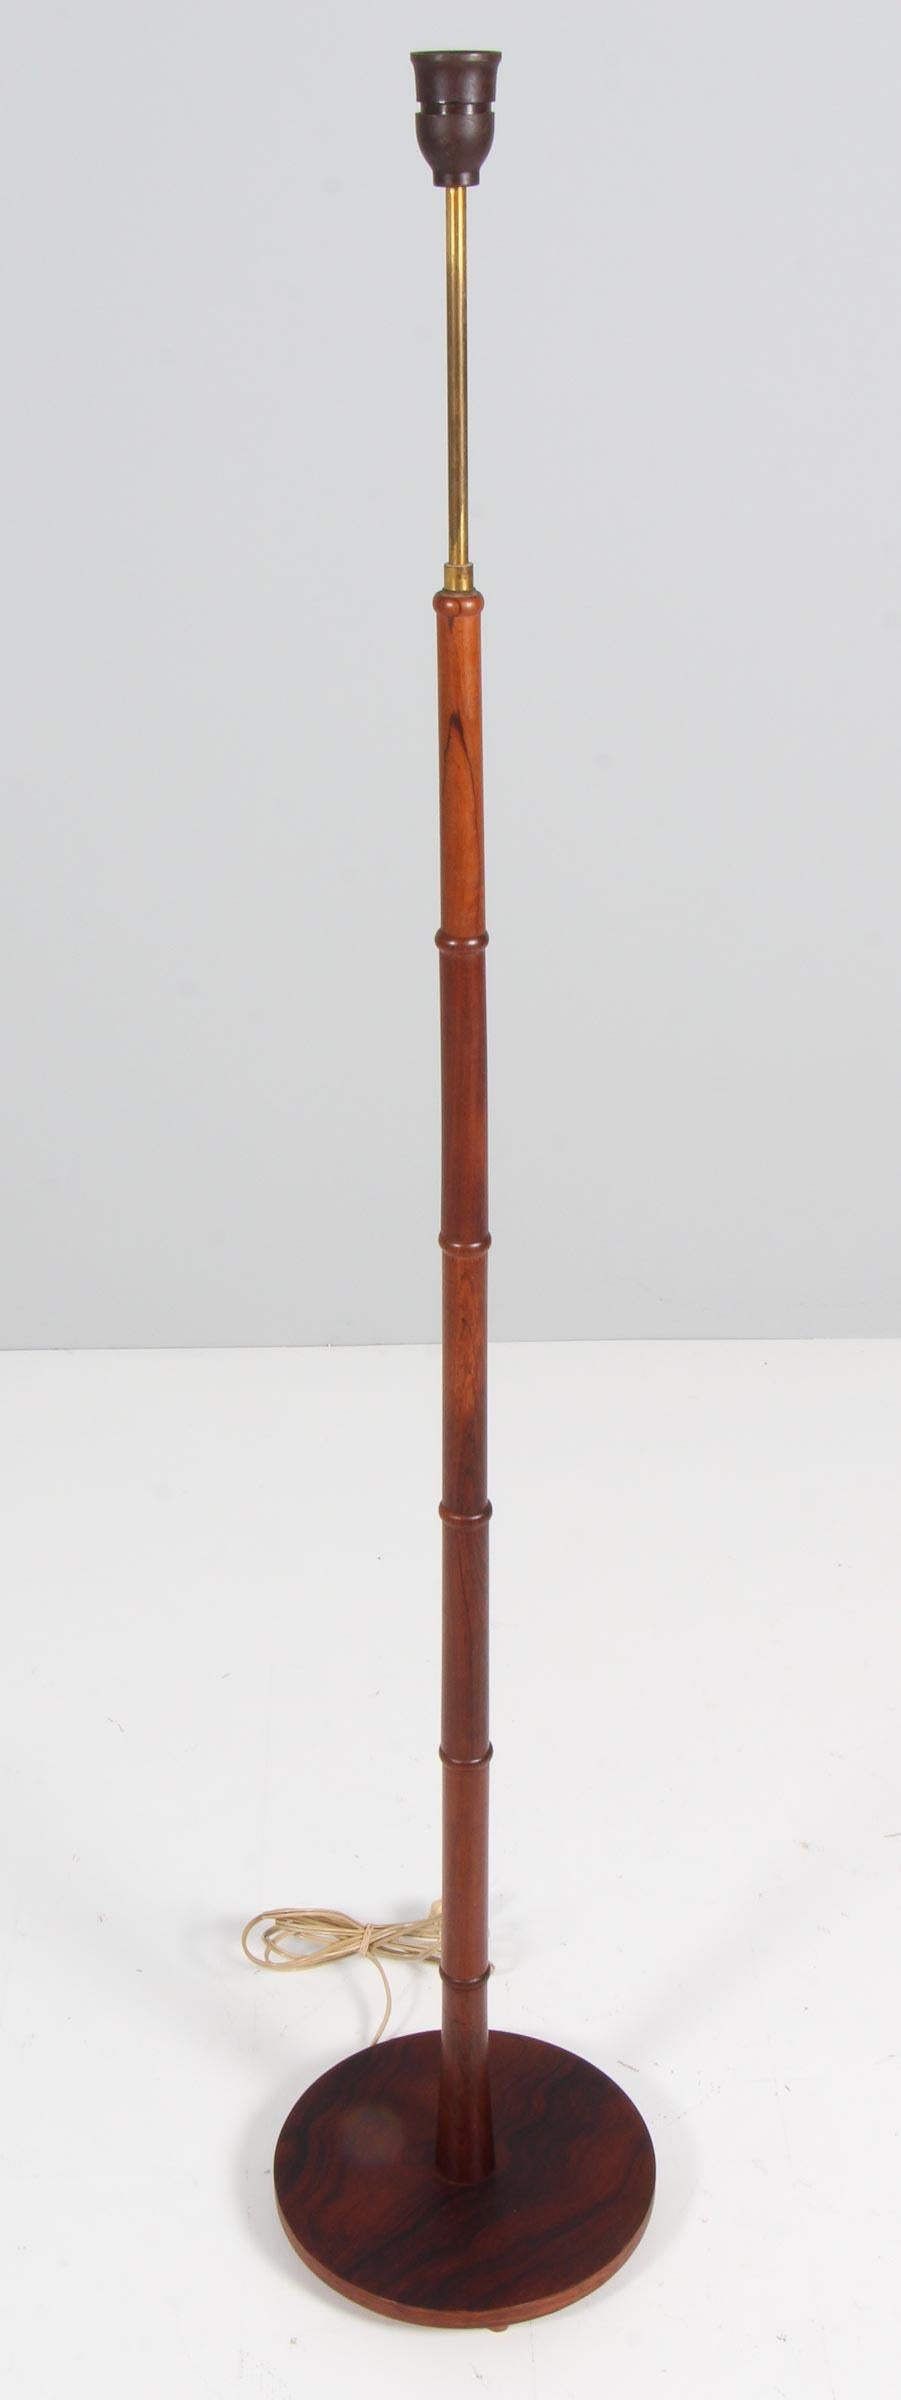 Esben Klint table lamp

In Rosewood.

Made by Le Klint.